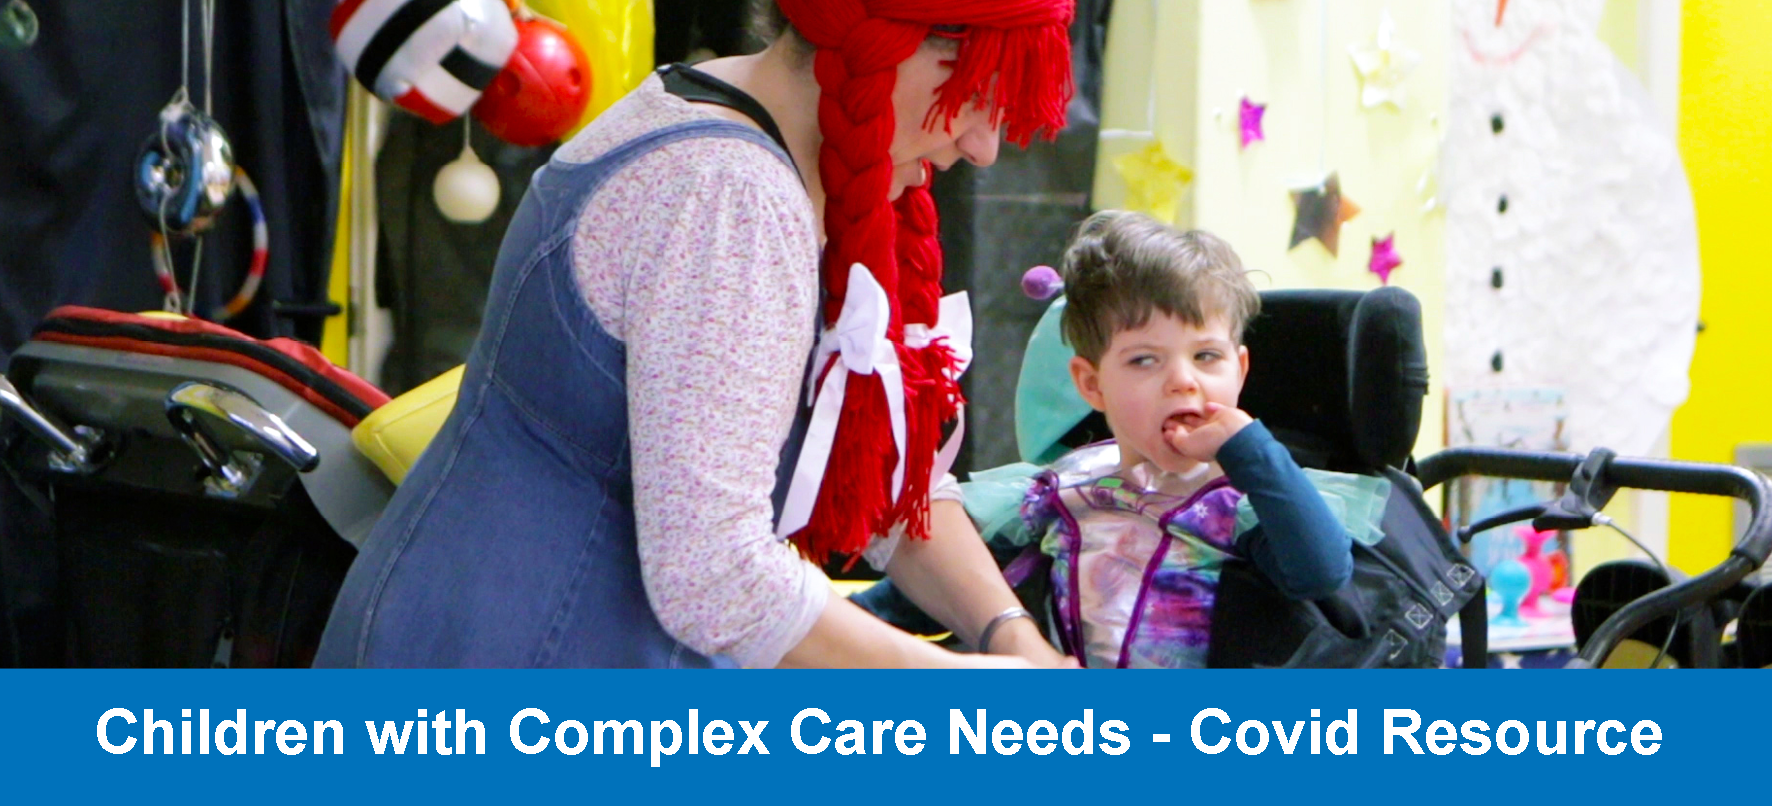 Children with complex care